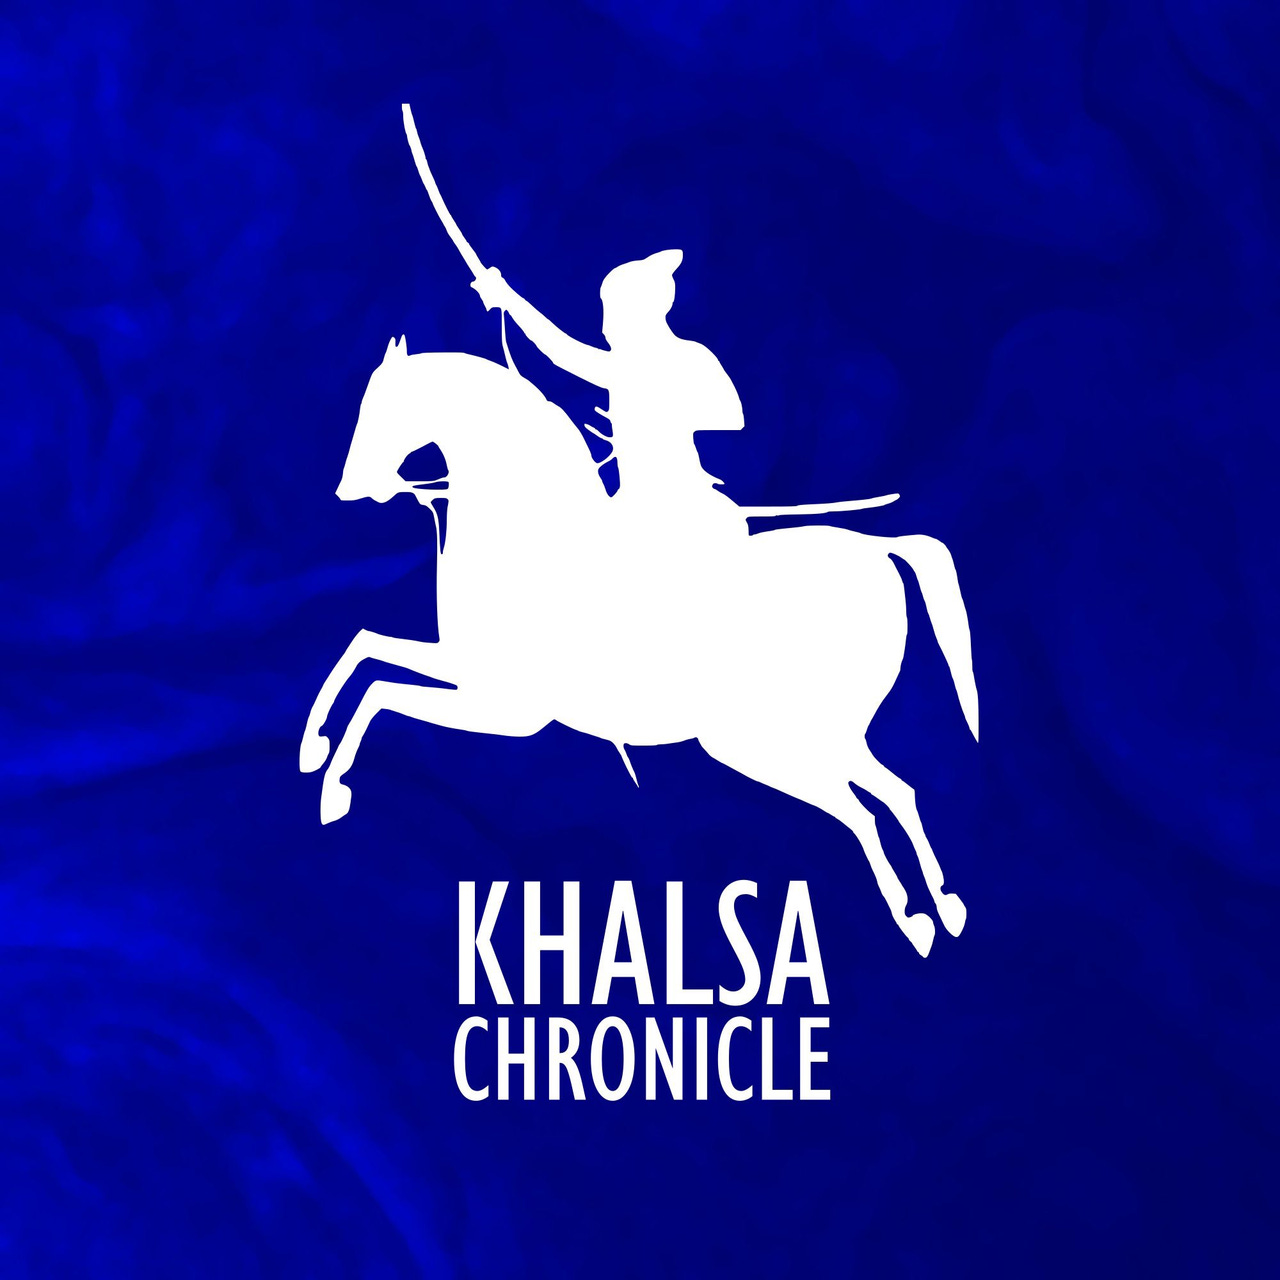 The Khalsa Chronicle